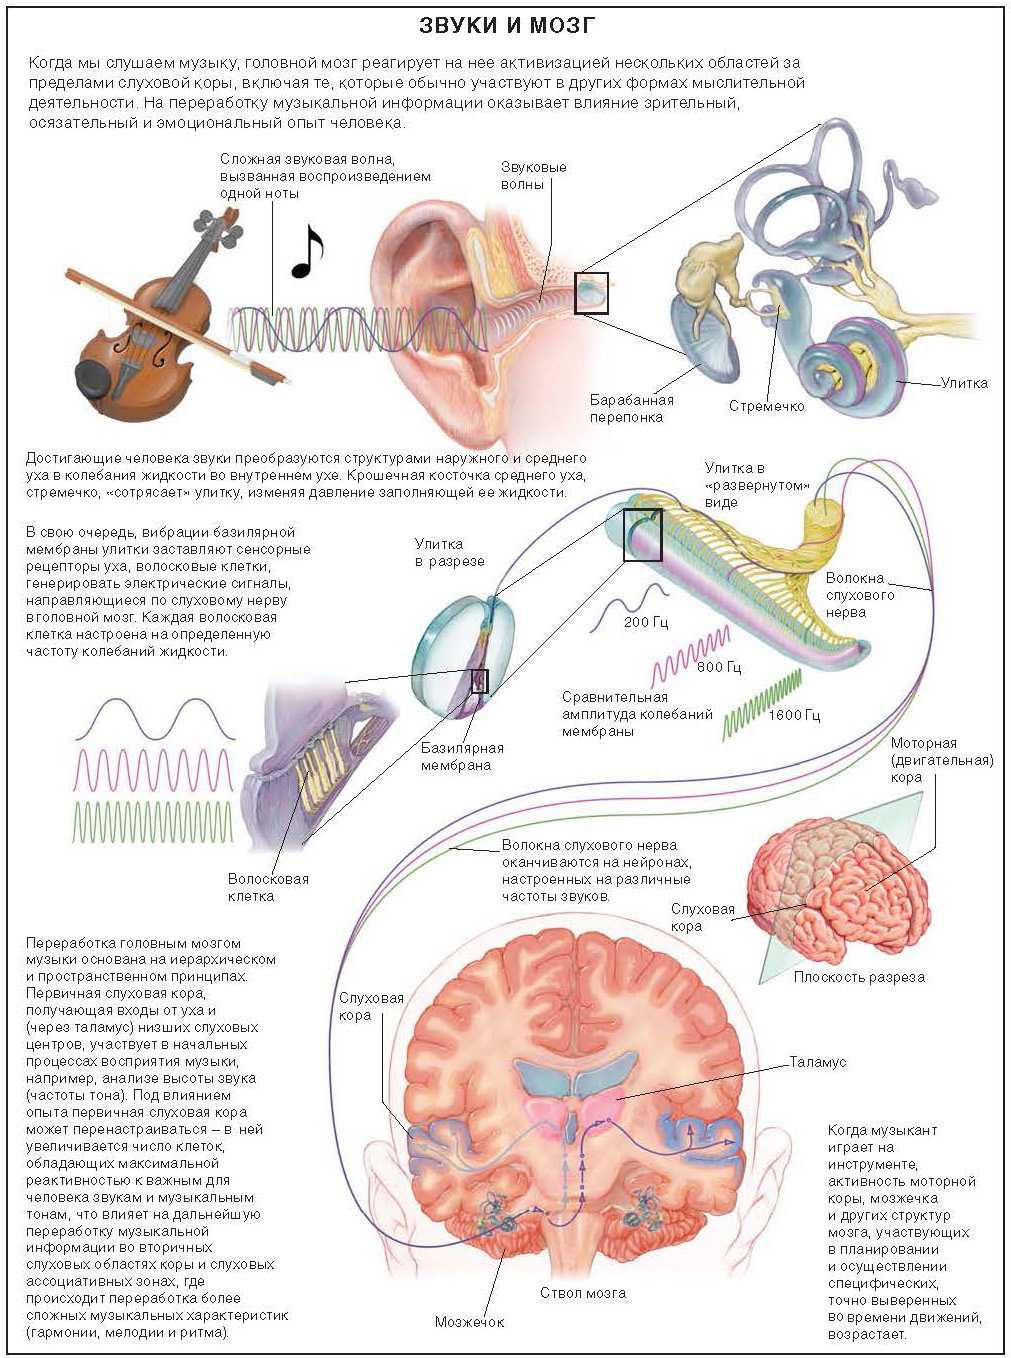 Влияние музыки на мозг человека: факты, исследования, теории